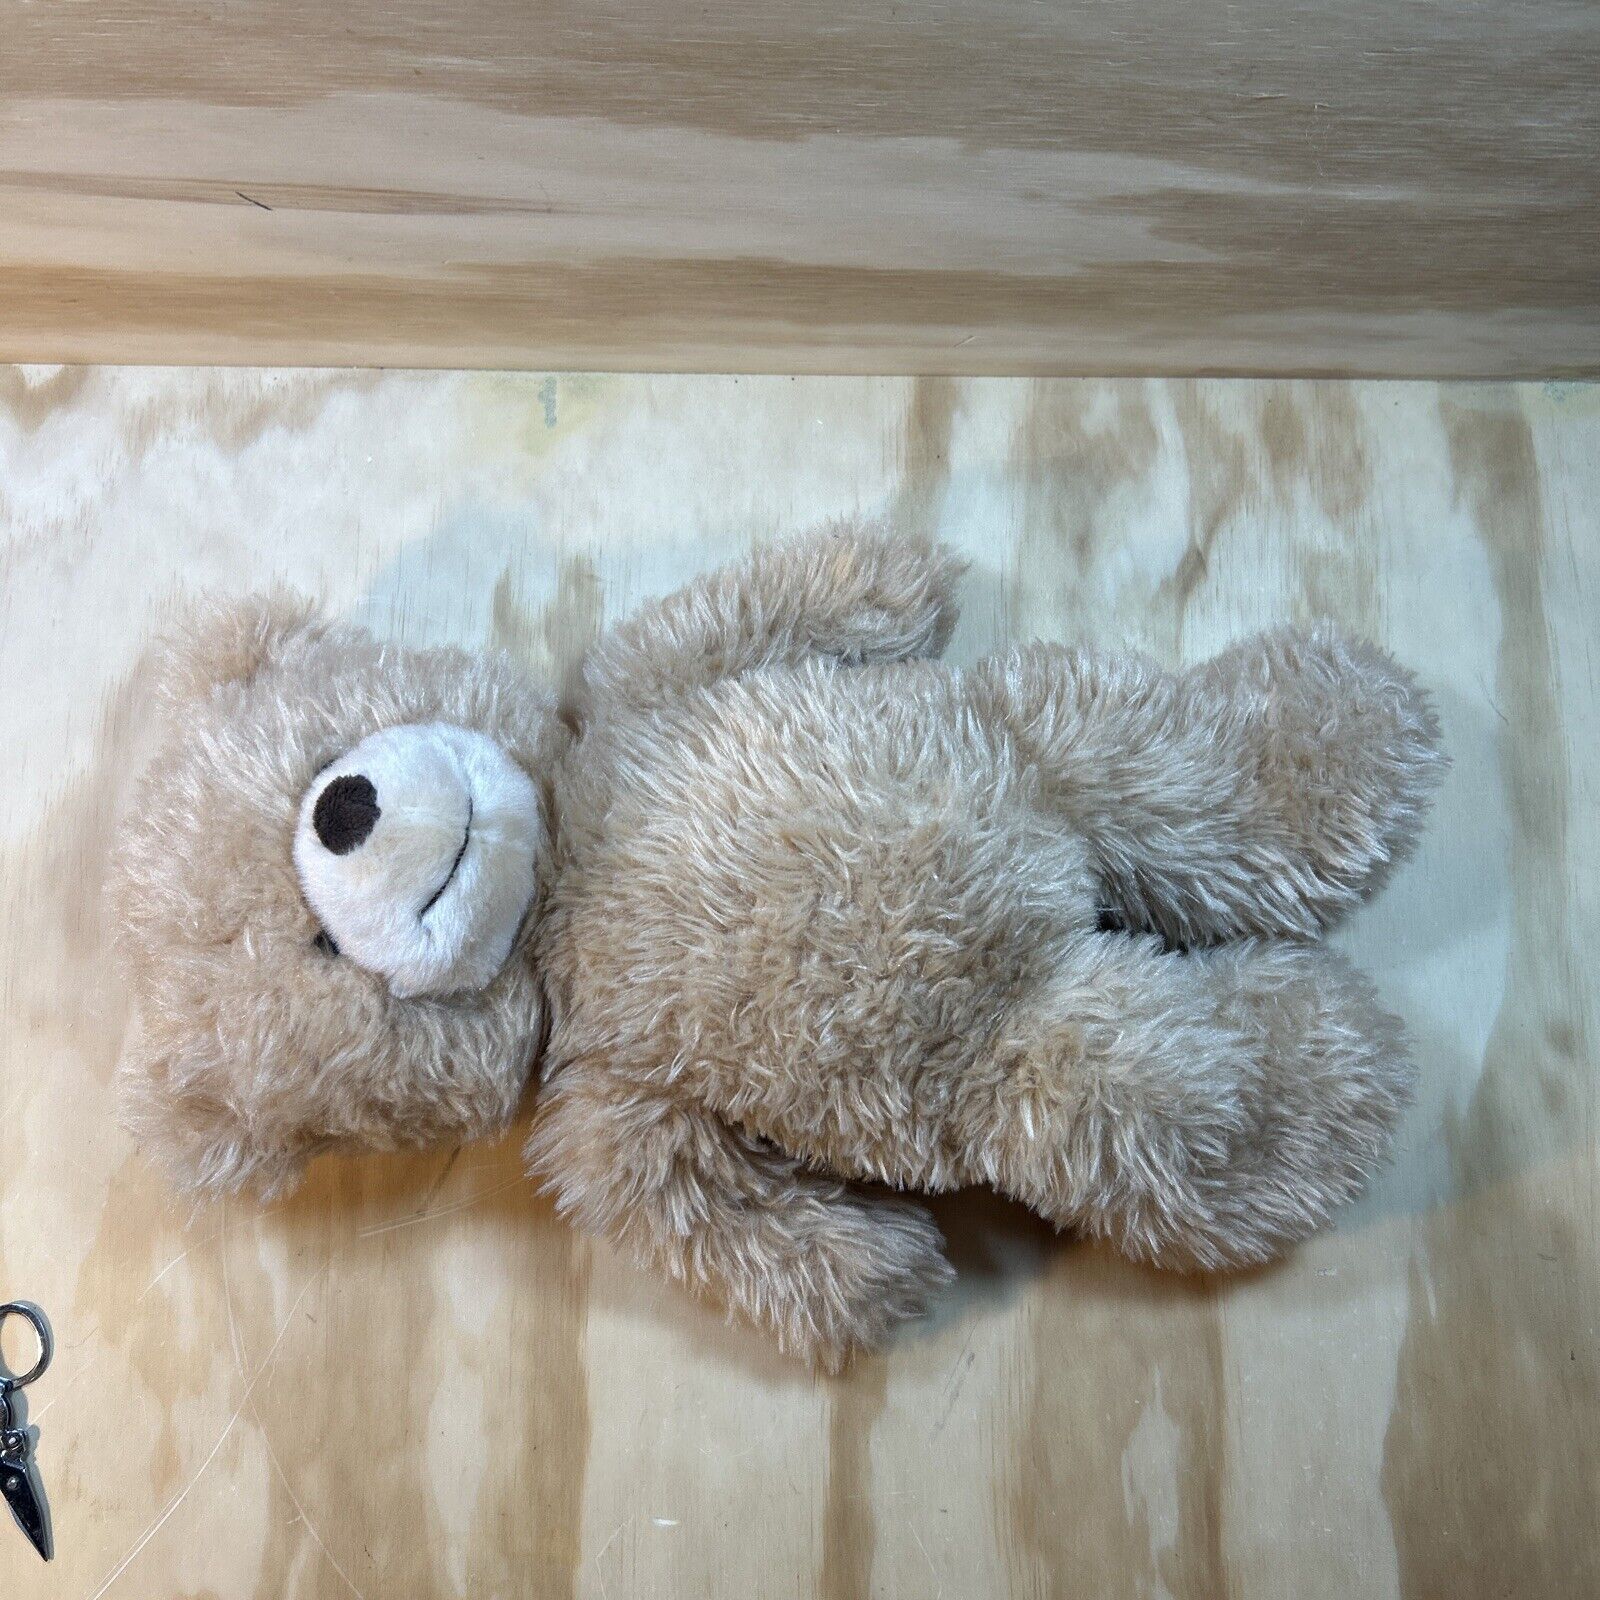 Gund Ginger Teddy Bear Plush 15” Shutterfly Fuzzy Soft